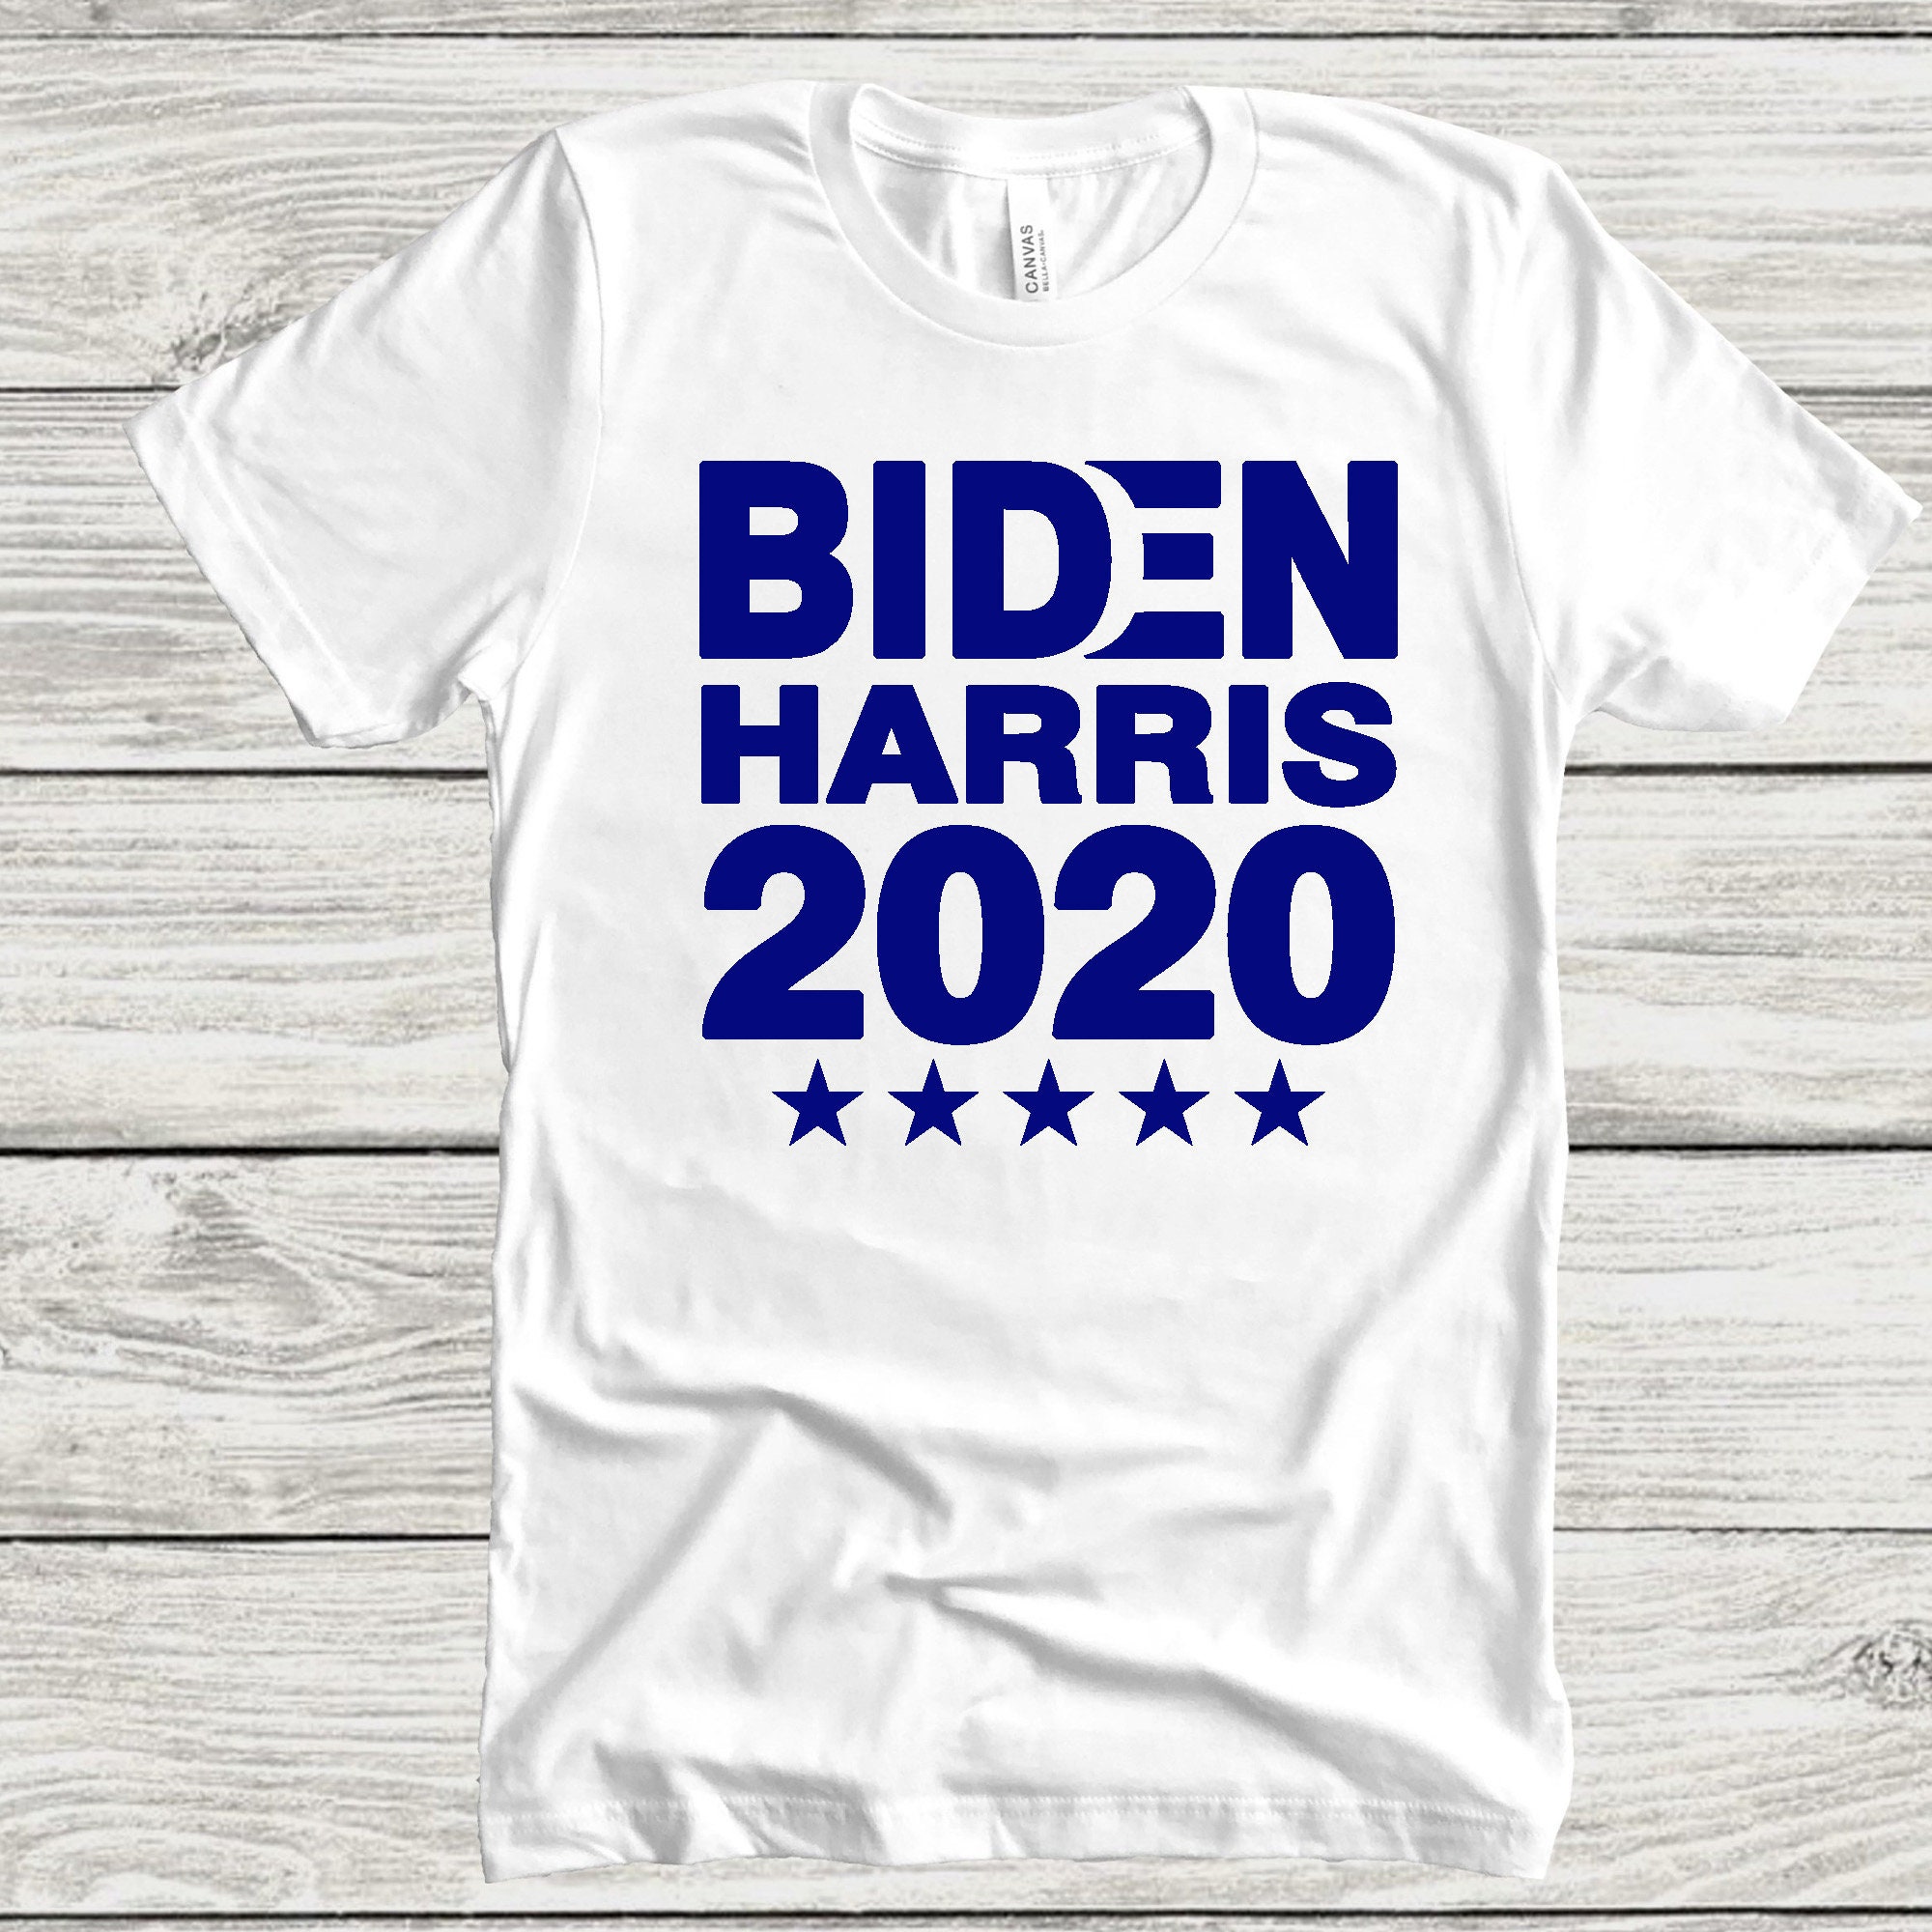 Biden Harris 2020 T-shirt Vote Shirt Election Day Election | Etsy